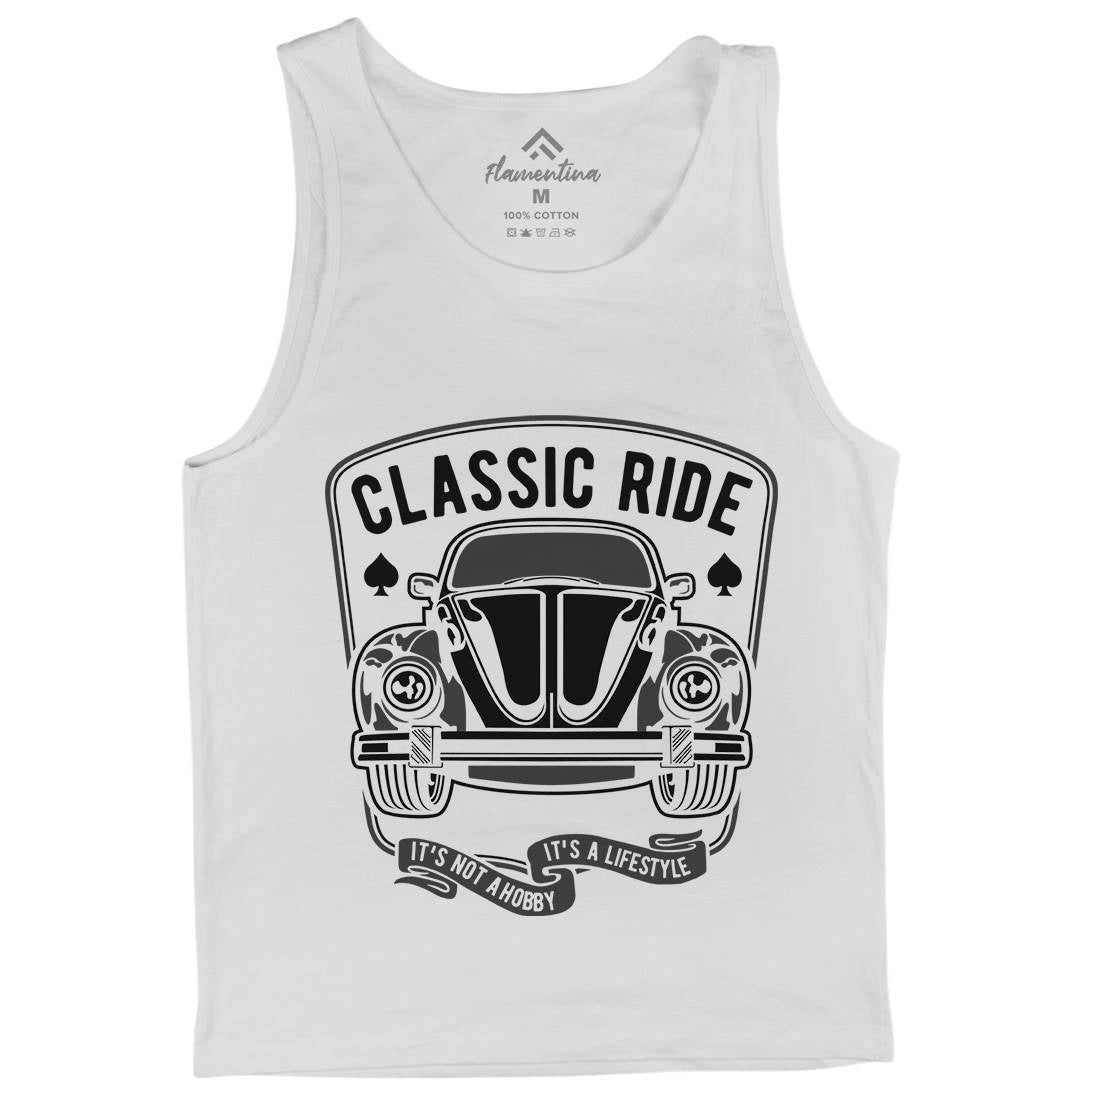 Classic Ride Mens Tank Top Vest Cars B195